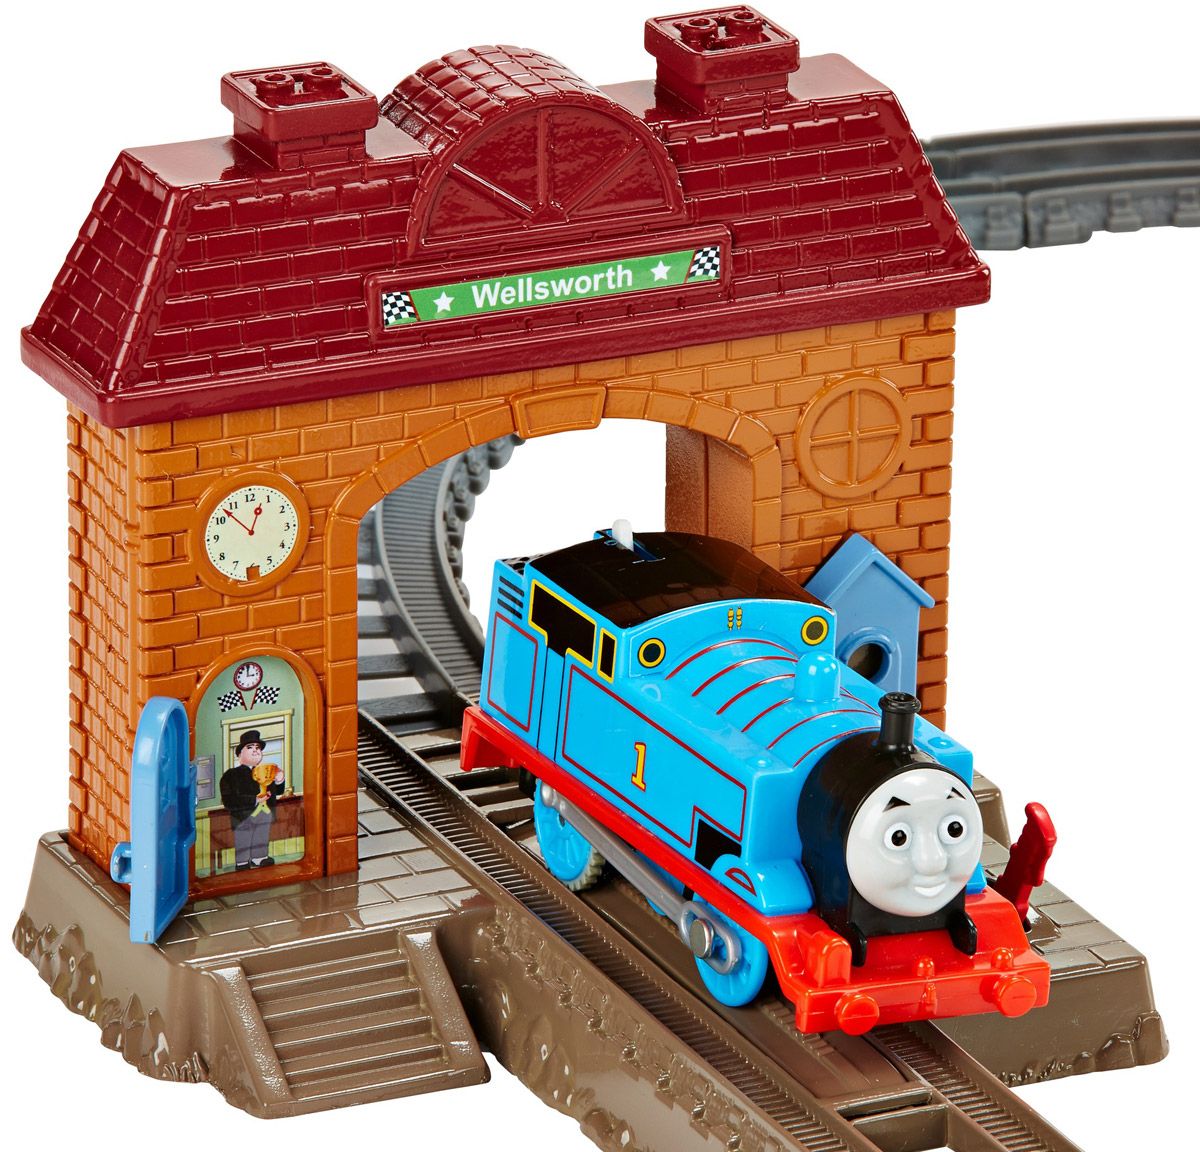 Thomas & Friends   